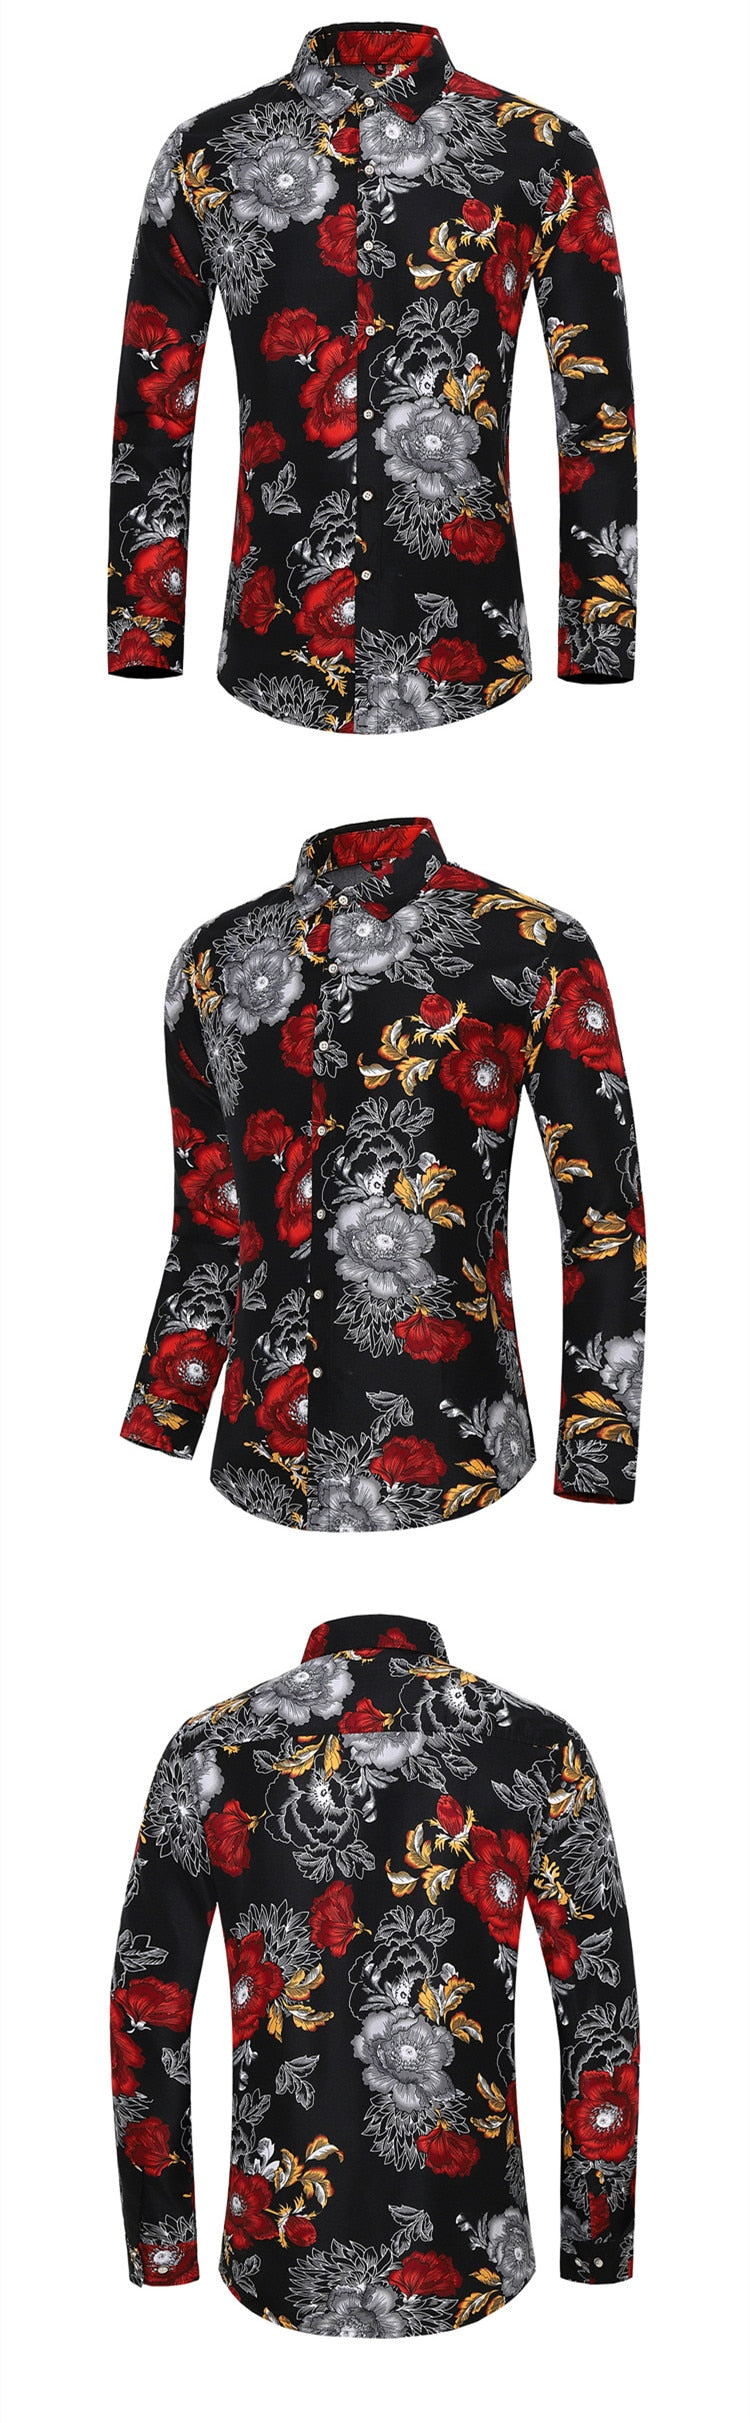 HGM men long-sleeved shirt fashion rose plant flower printed shirt